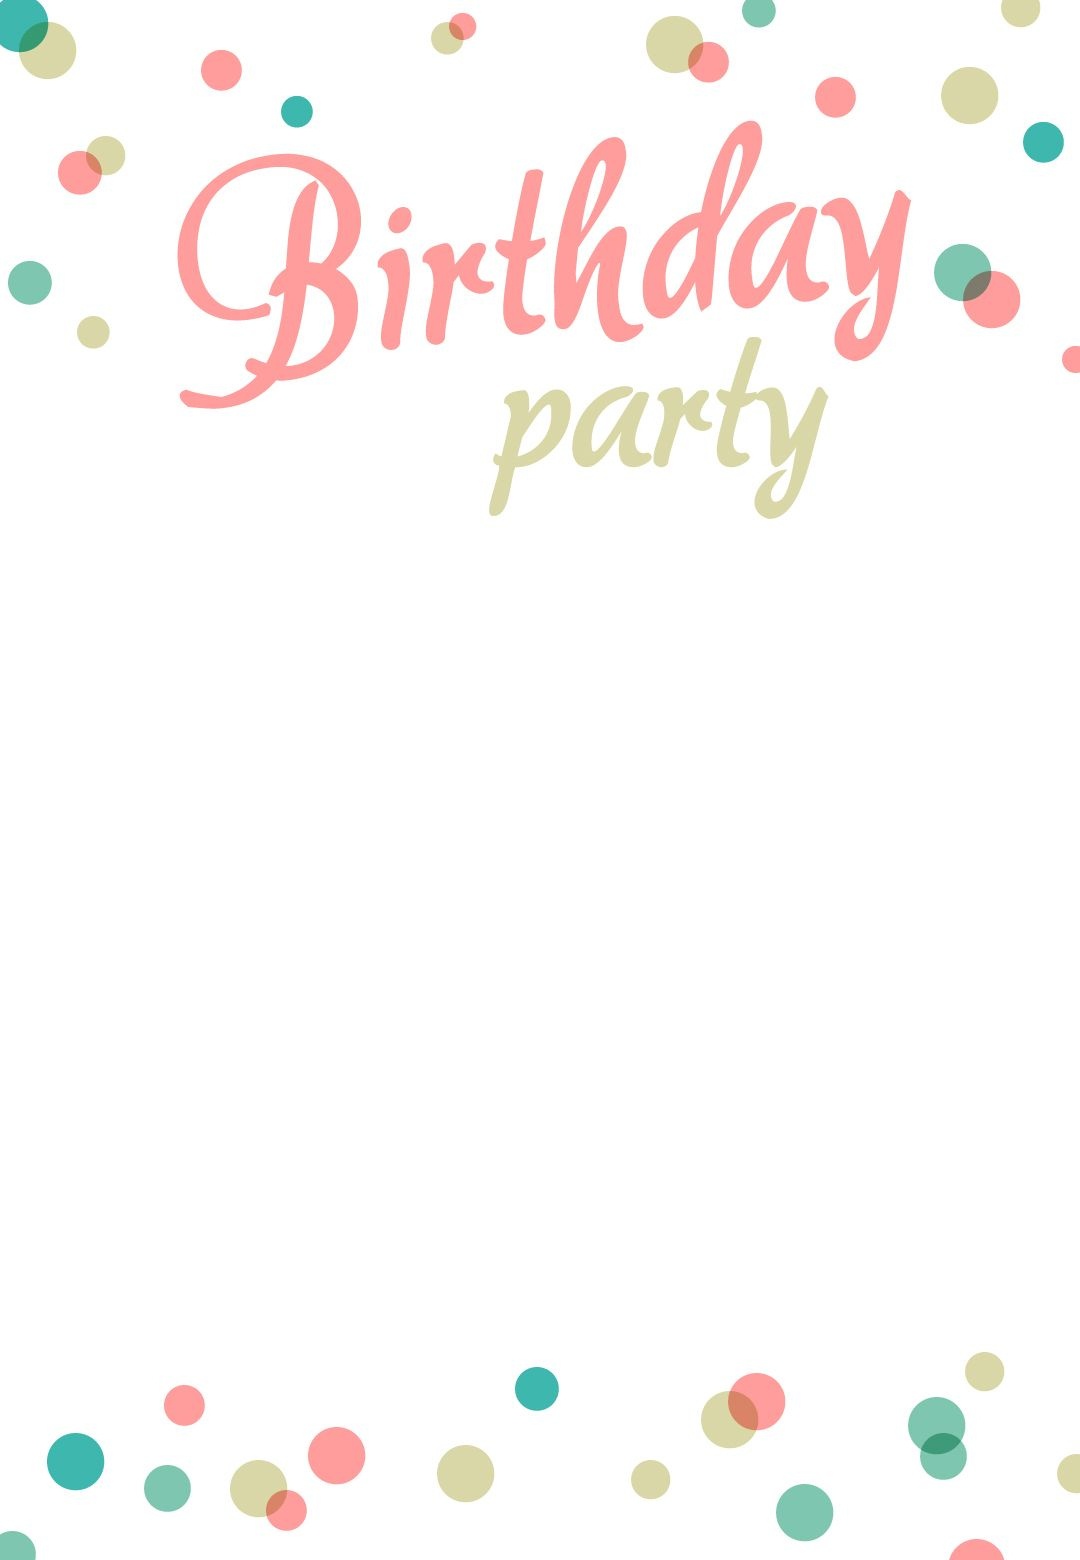 Birthday Party #invitation Free Printable | Invitations | Pinterest - Free Printable Birthday Invitations Pinterest